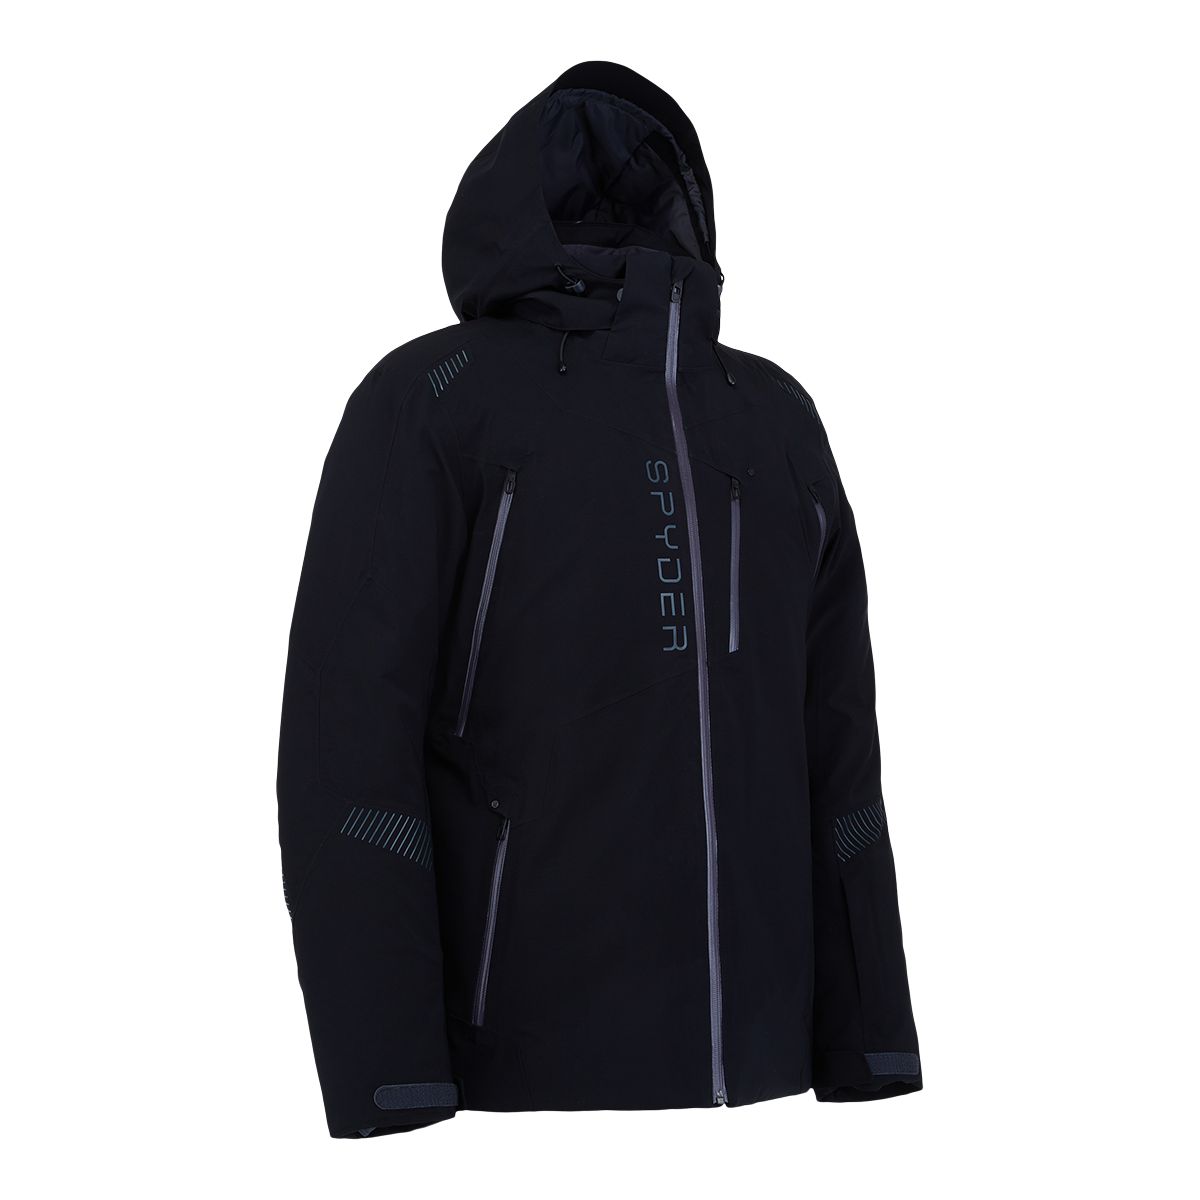 Spyder 'Hooded Zip Up Yoga Jacket in Black